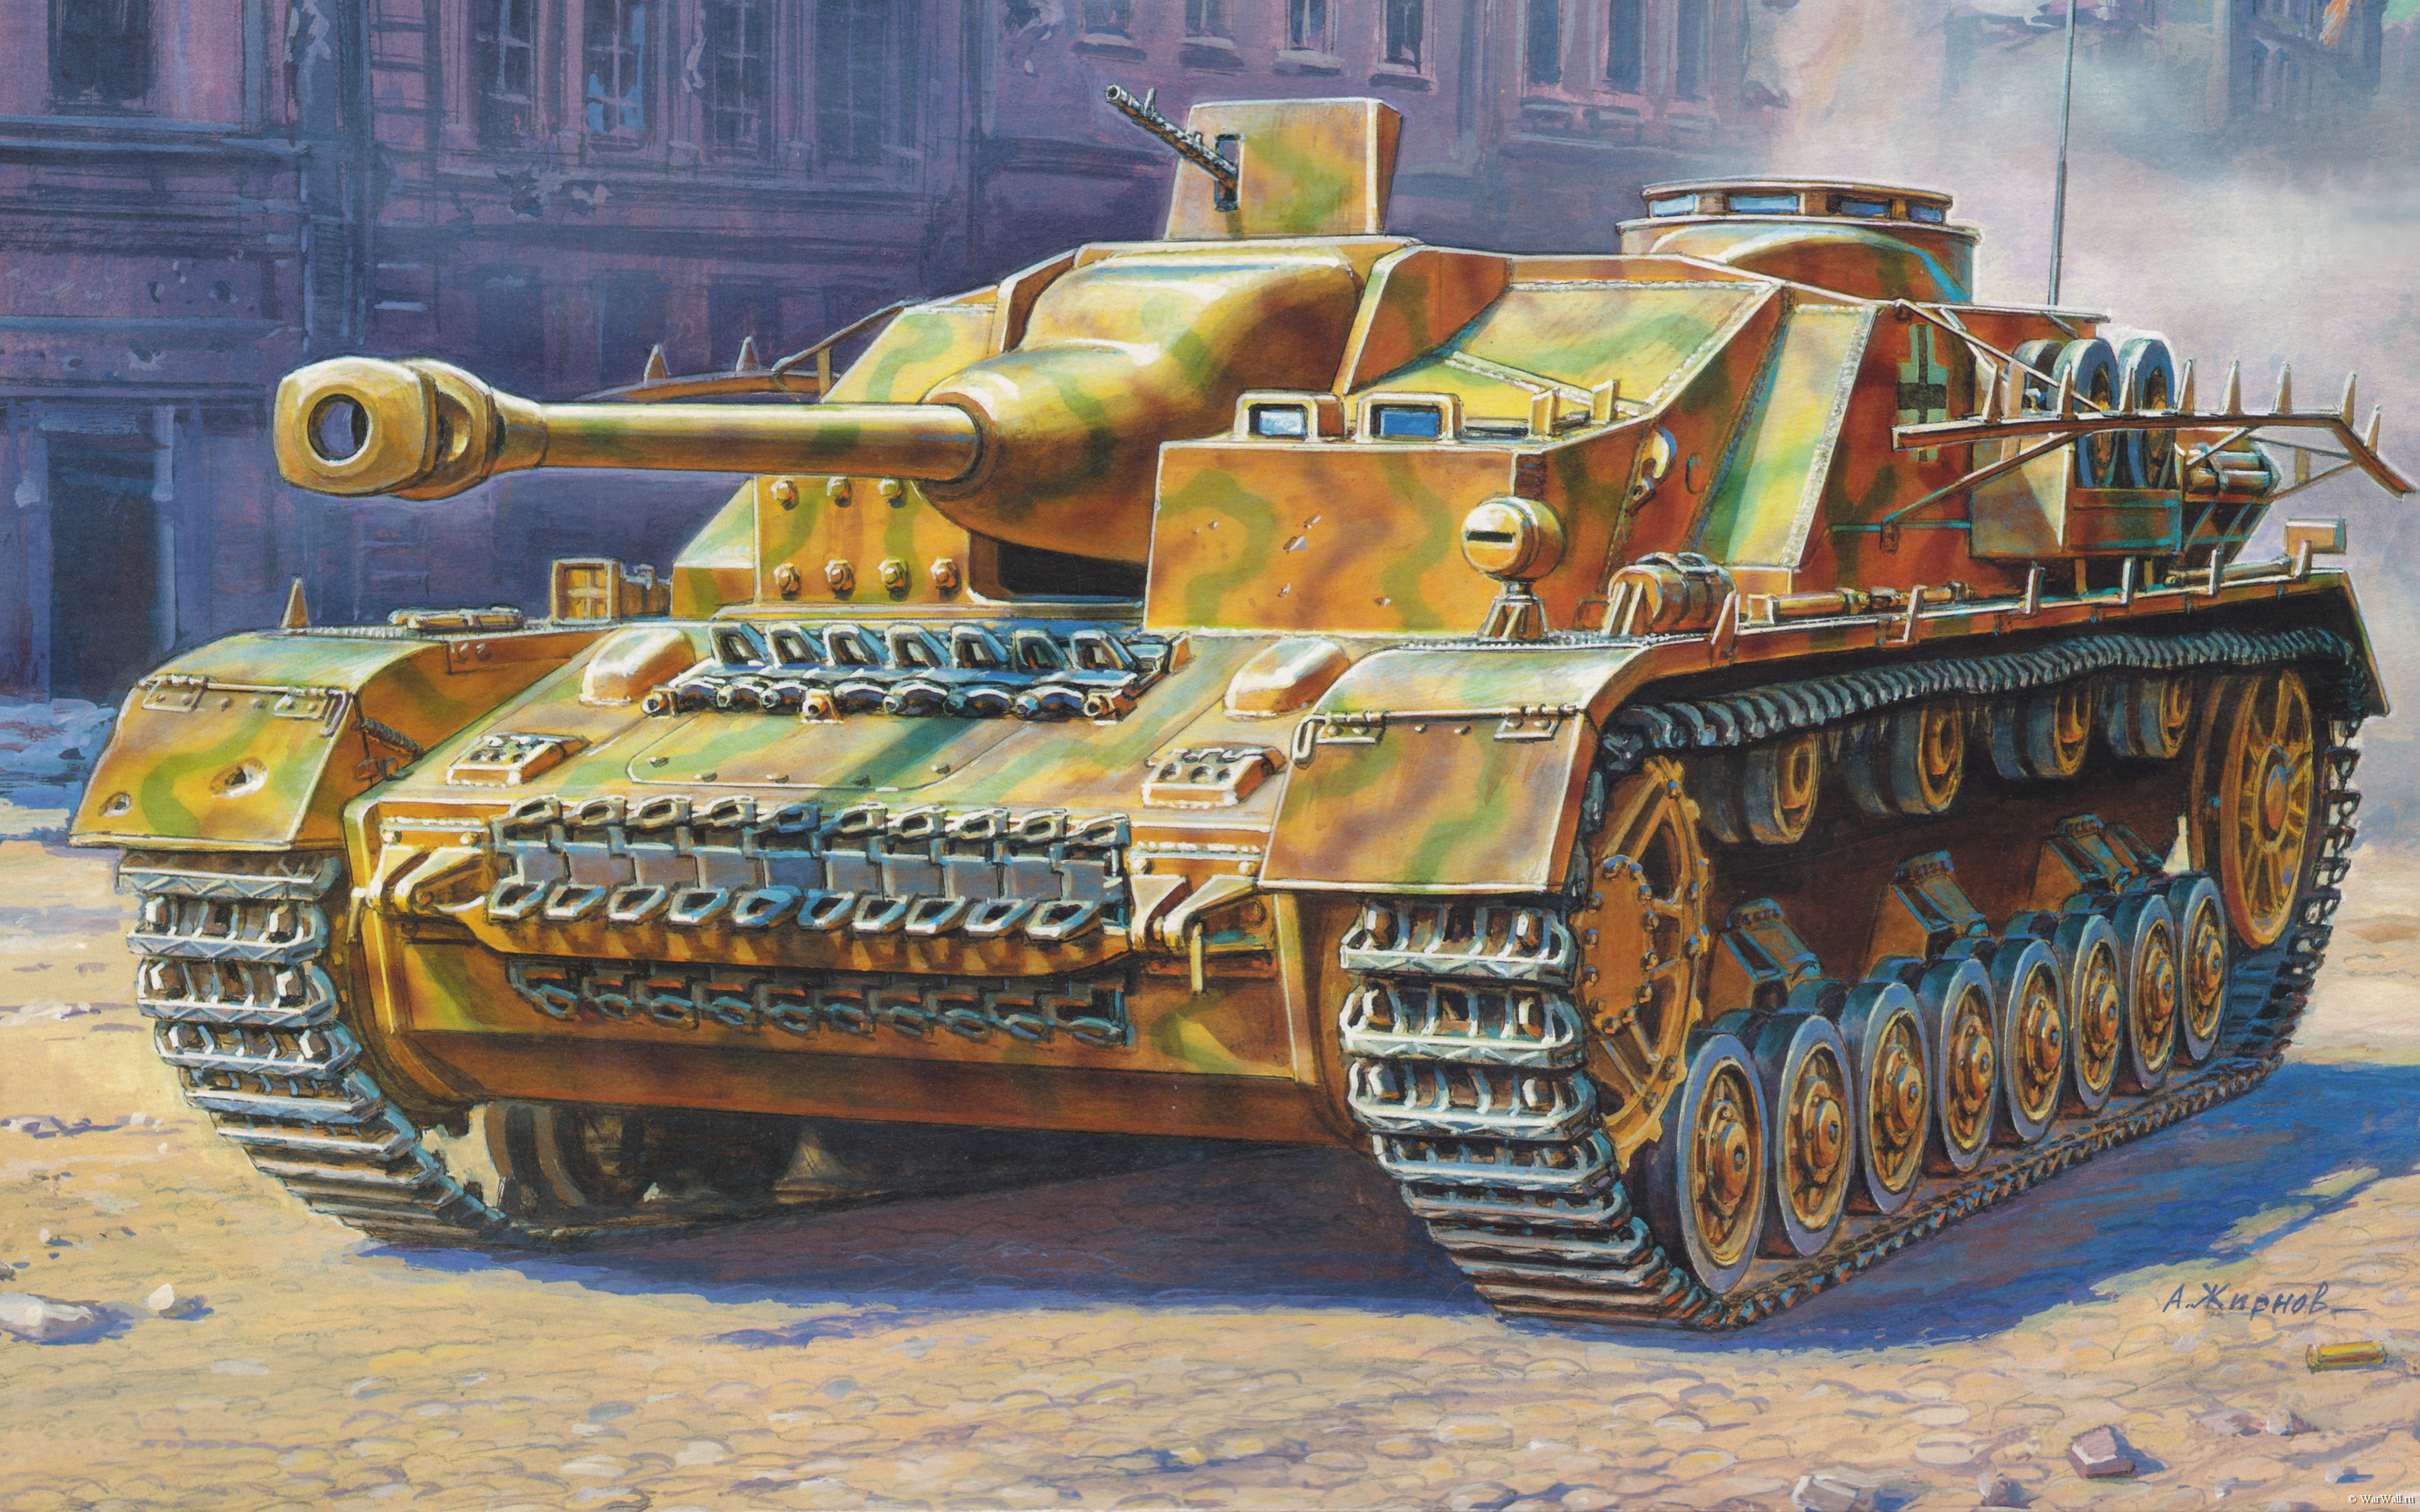 22 немецких танков